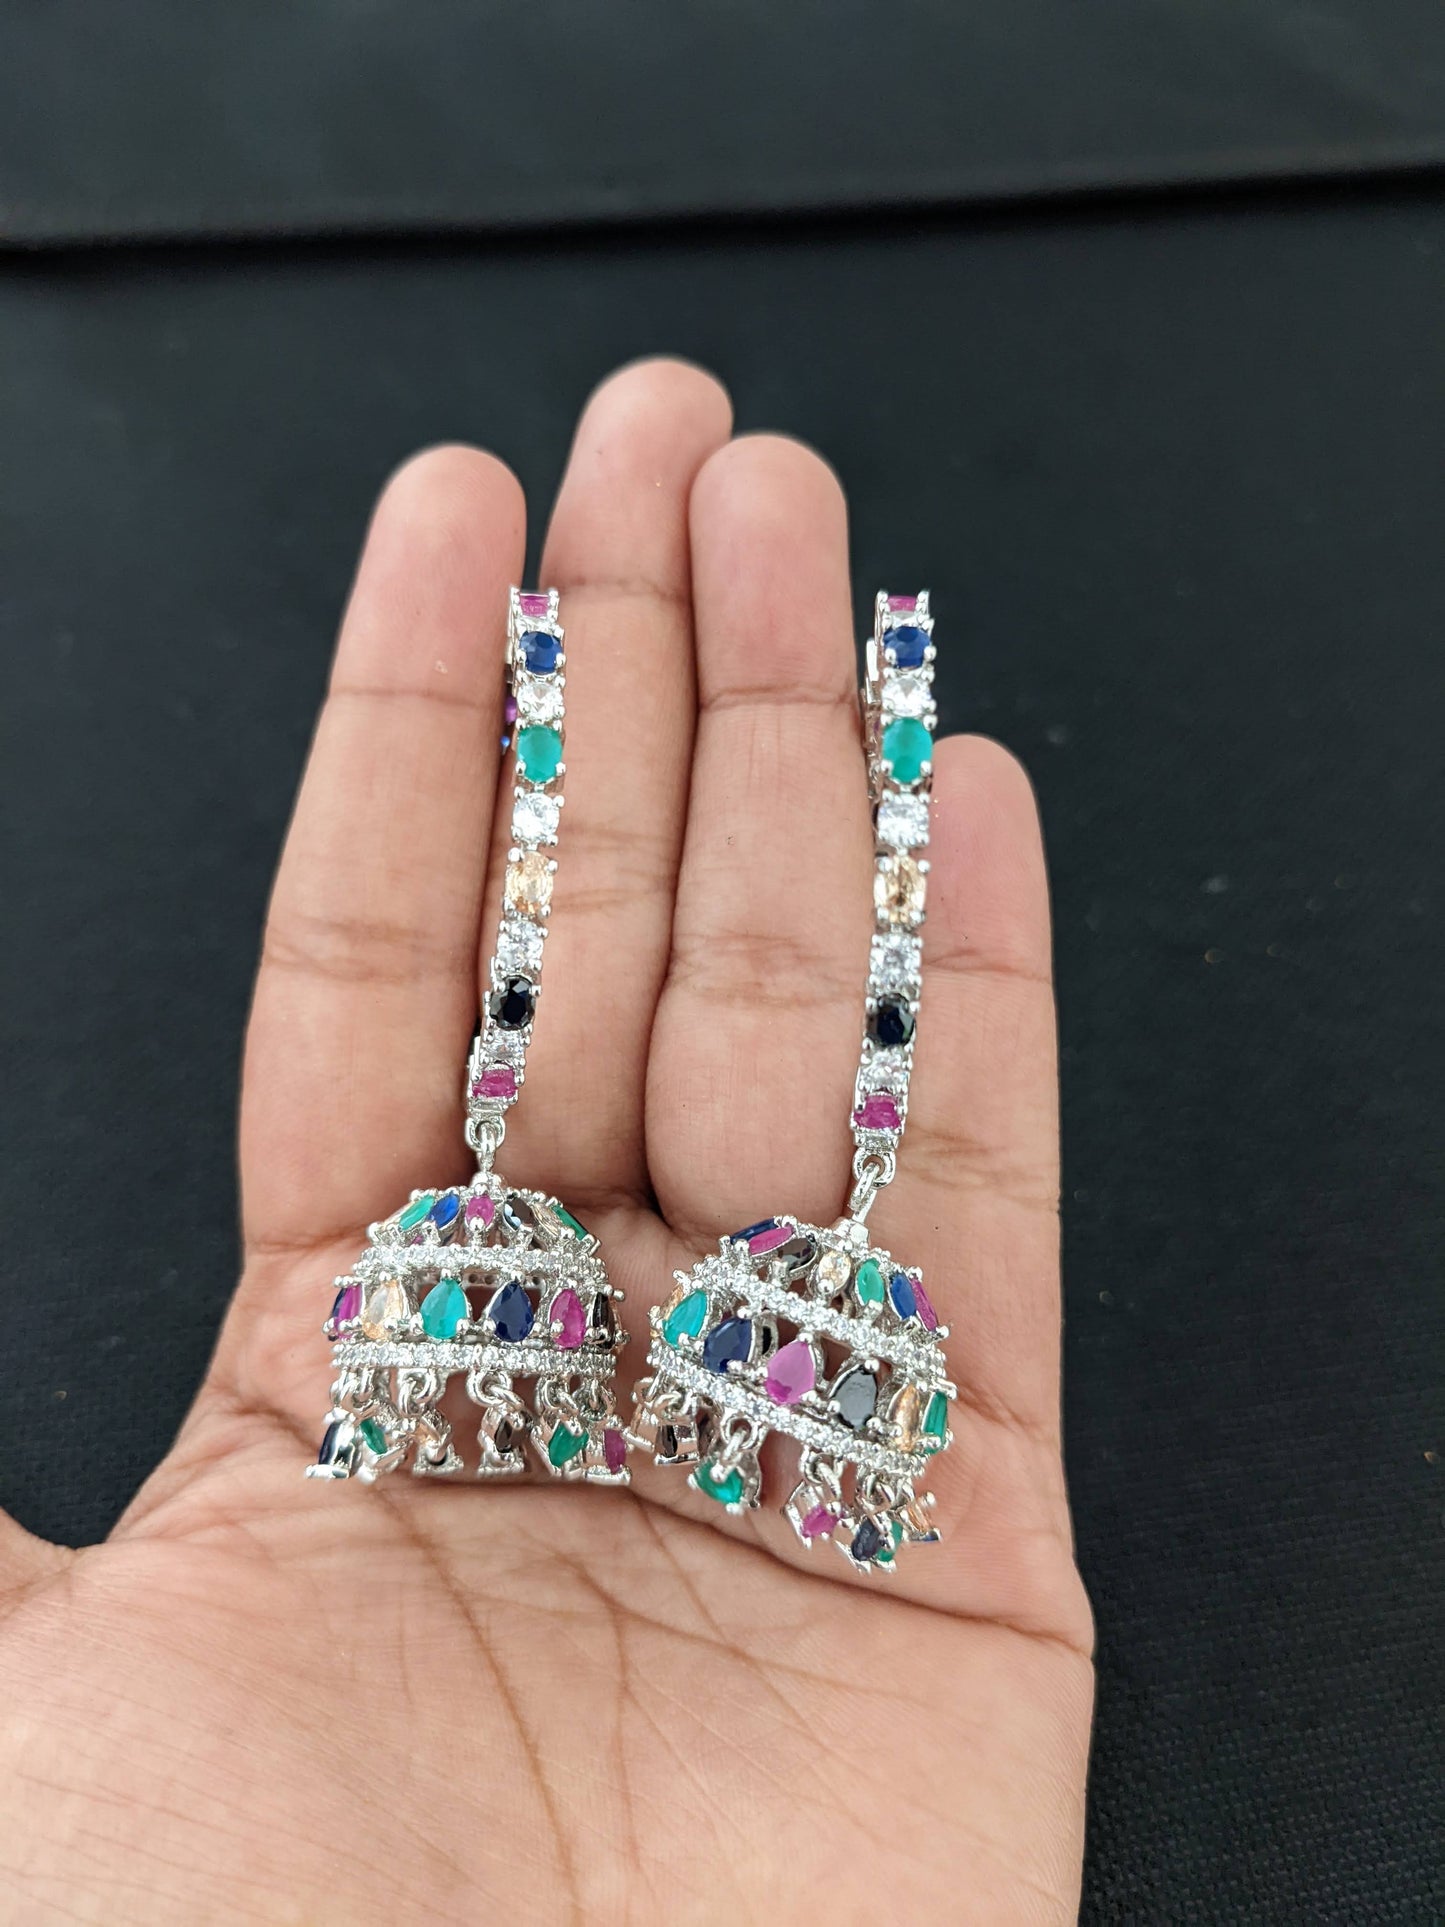 Diamond look alike Choker Necklace set - Design 1